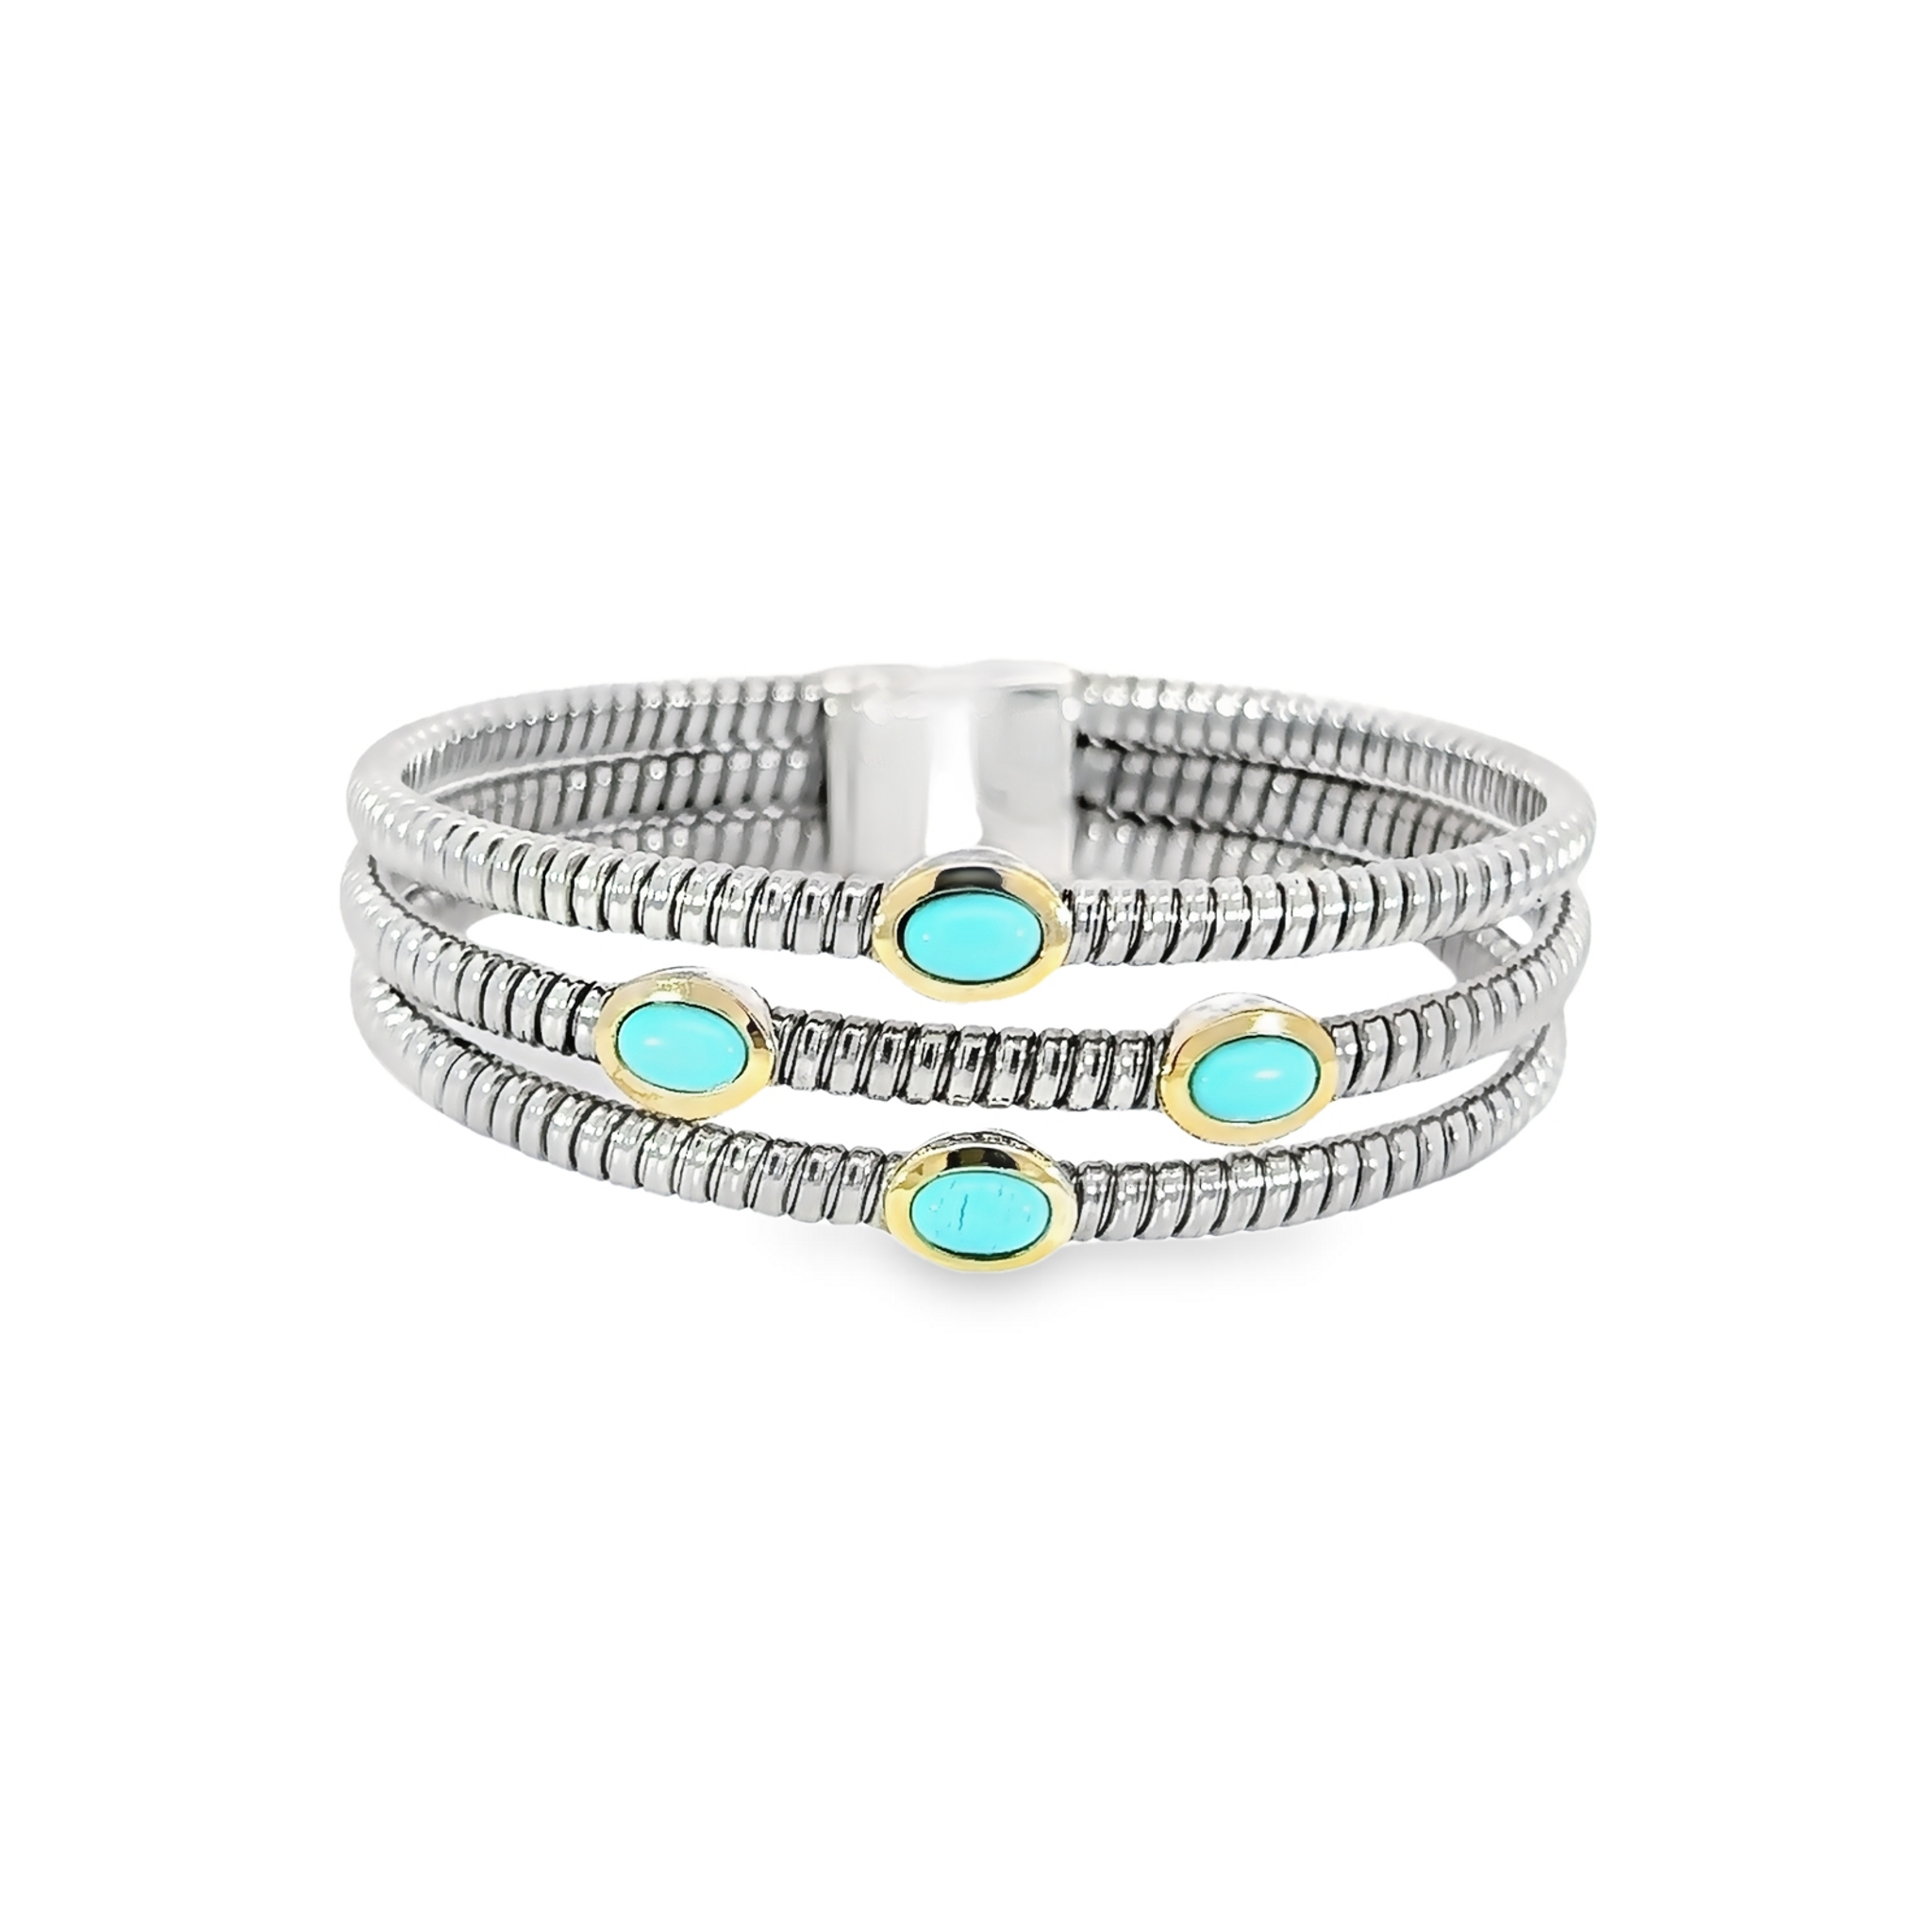 Stainless Steel Turquoise Bangle Bracelet